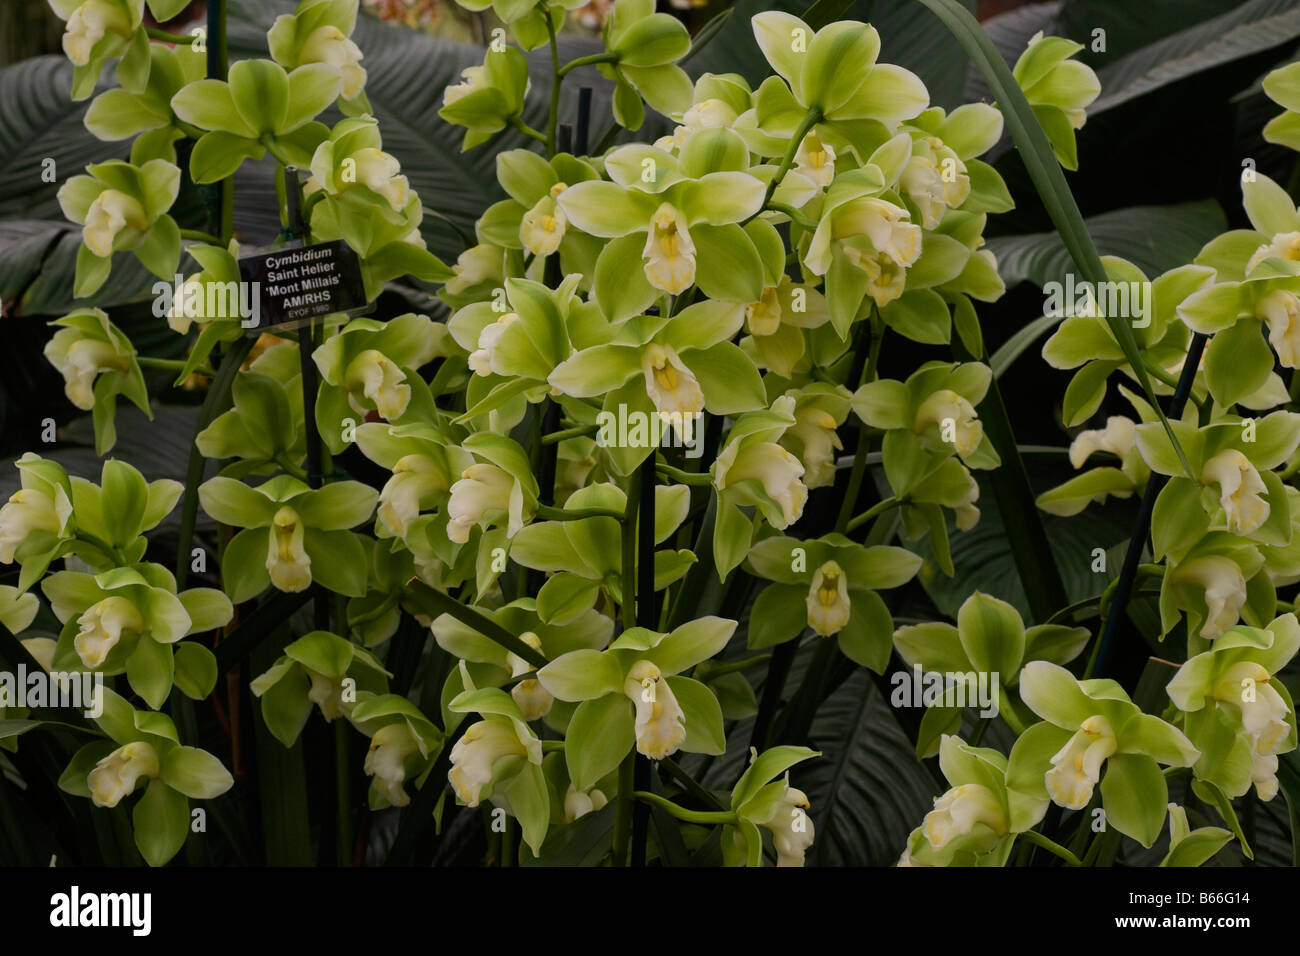 Orchid Cymbidium Saint Helier 'Mont Millais' AM/RHS Stock Photo